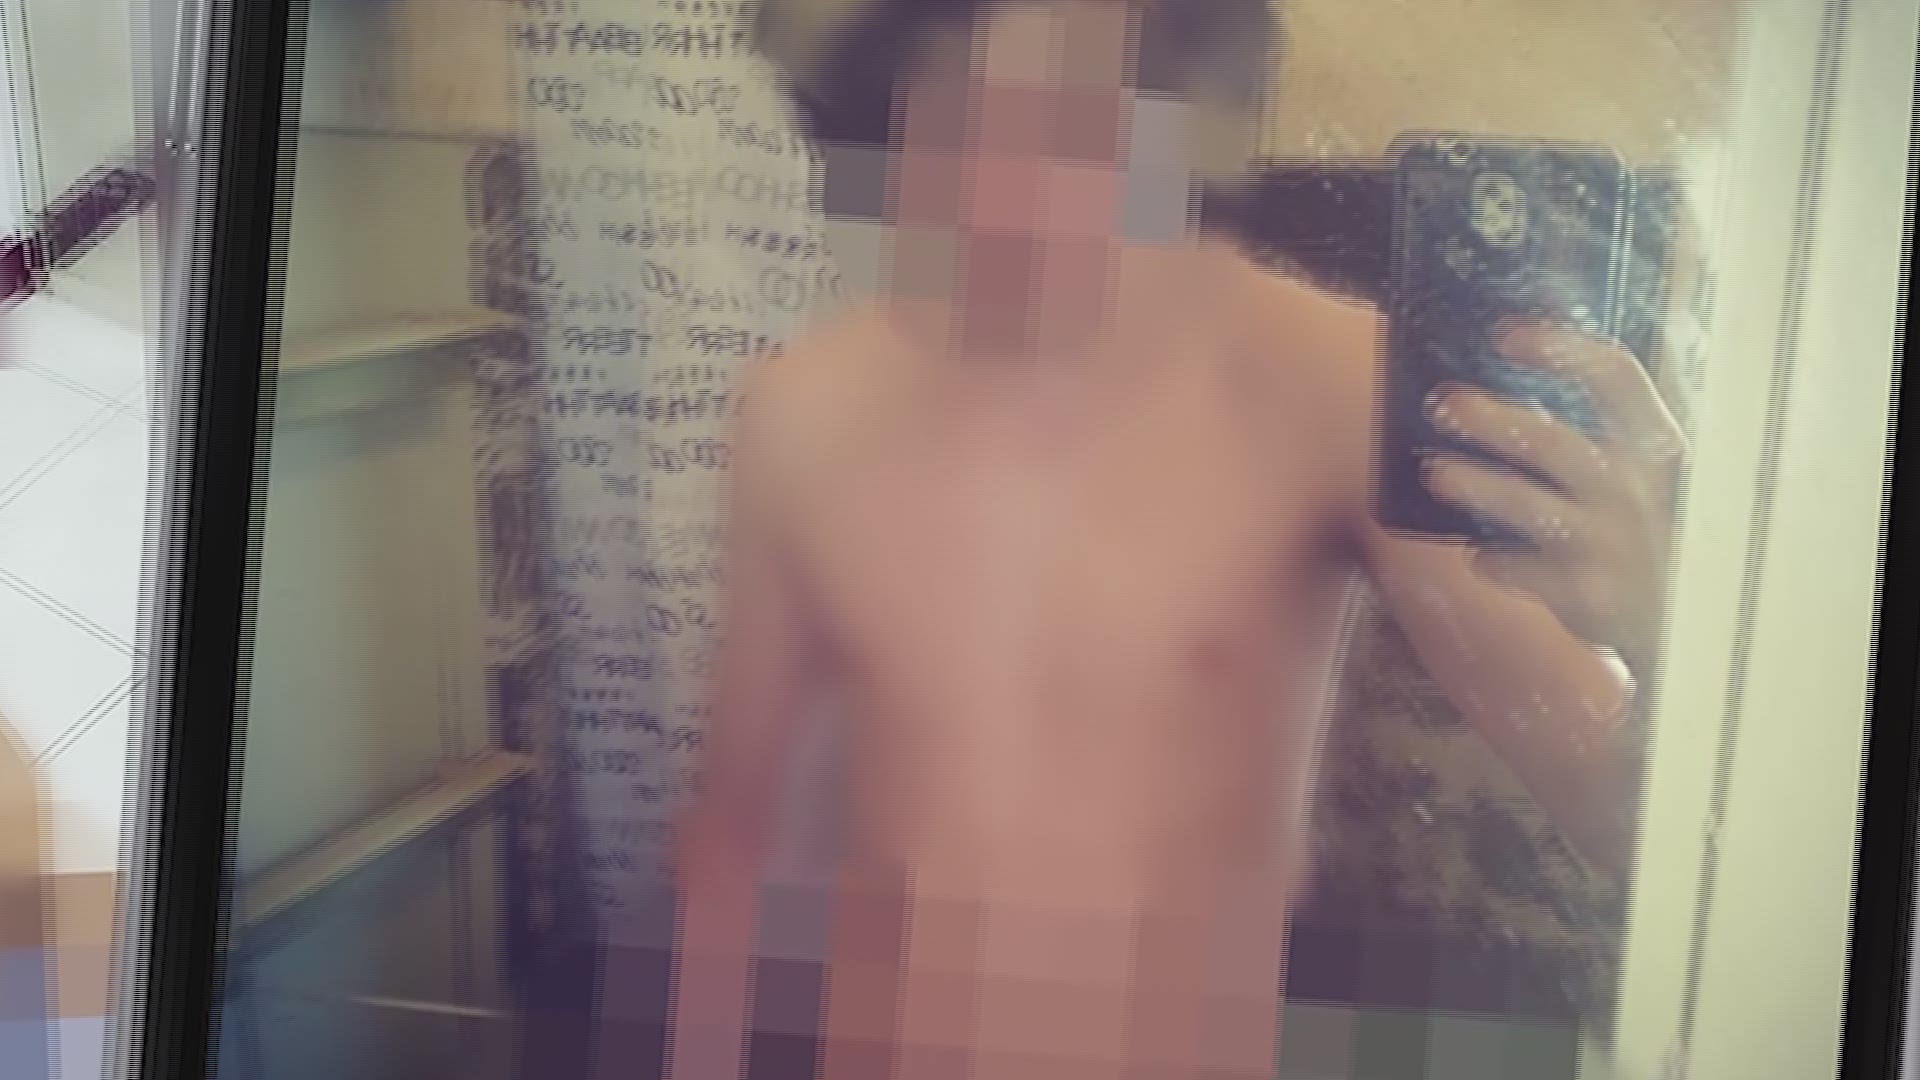 From sending nude selfies to spreading gossip and rumors.